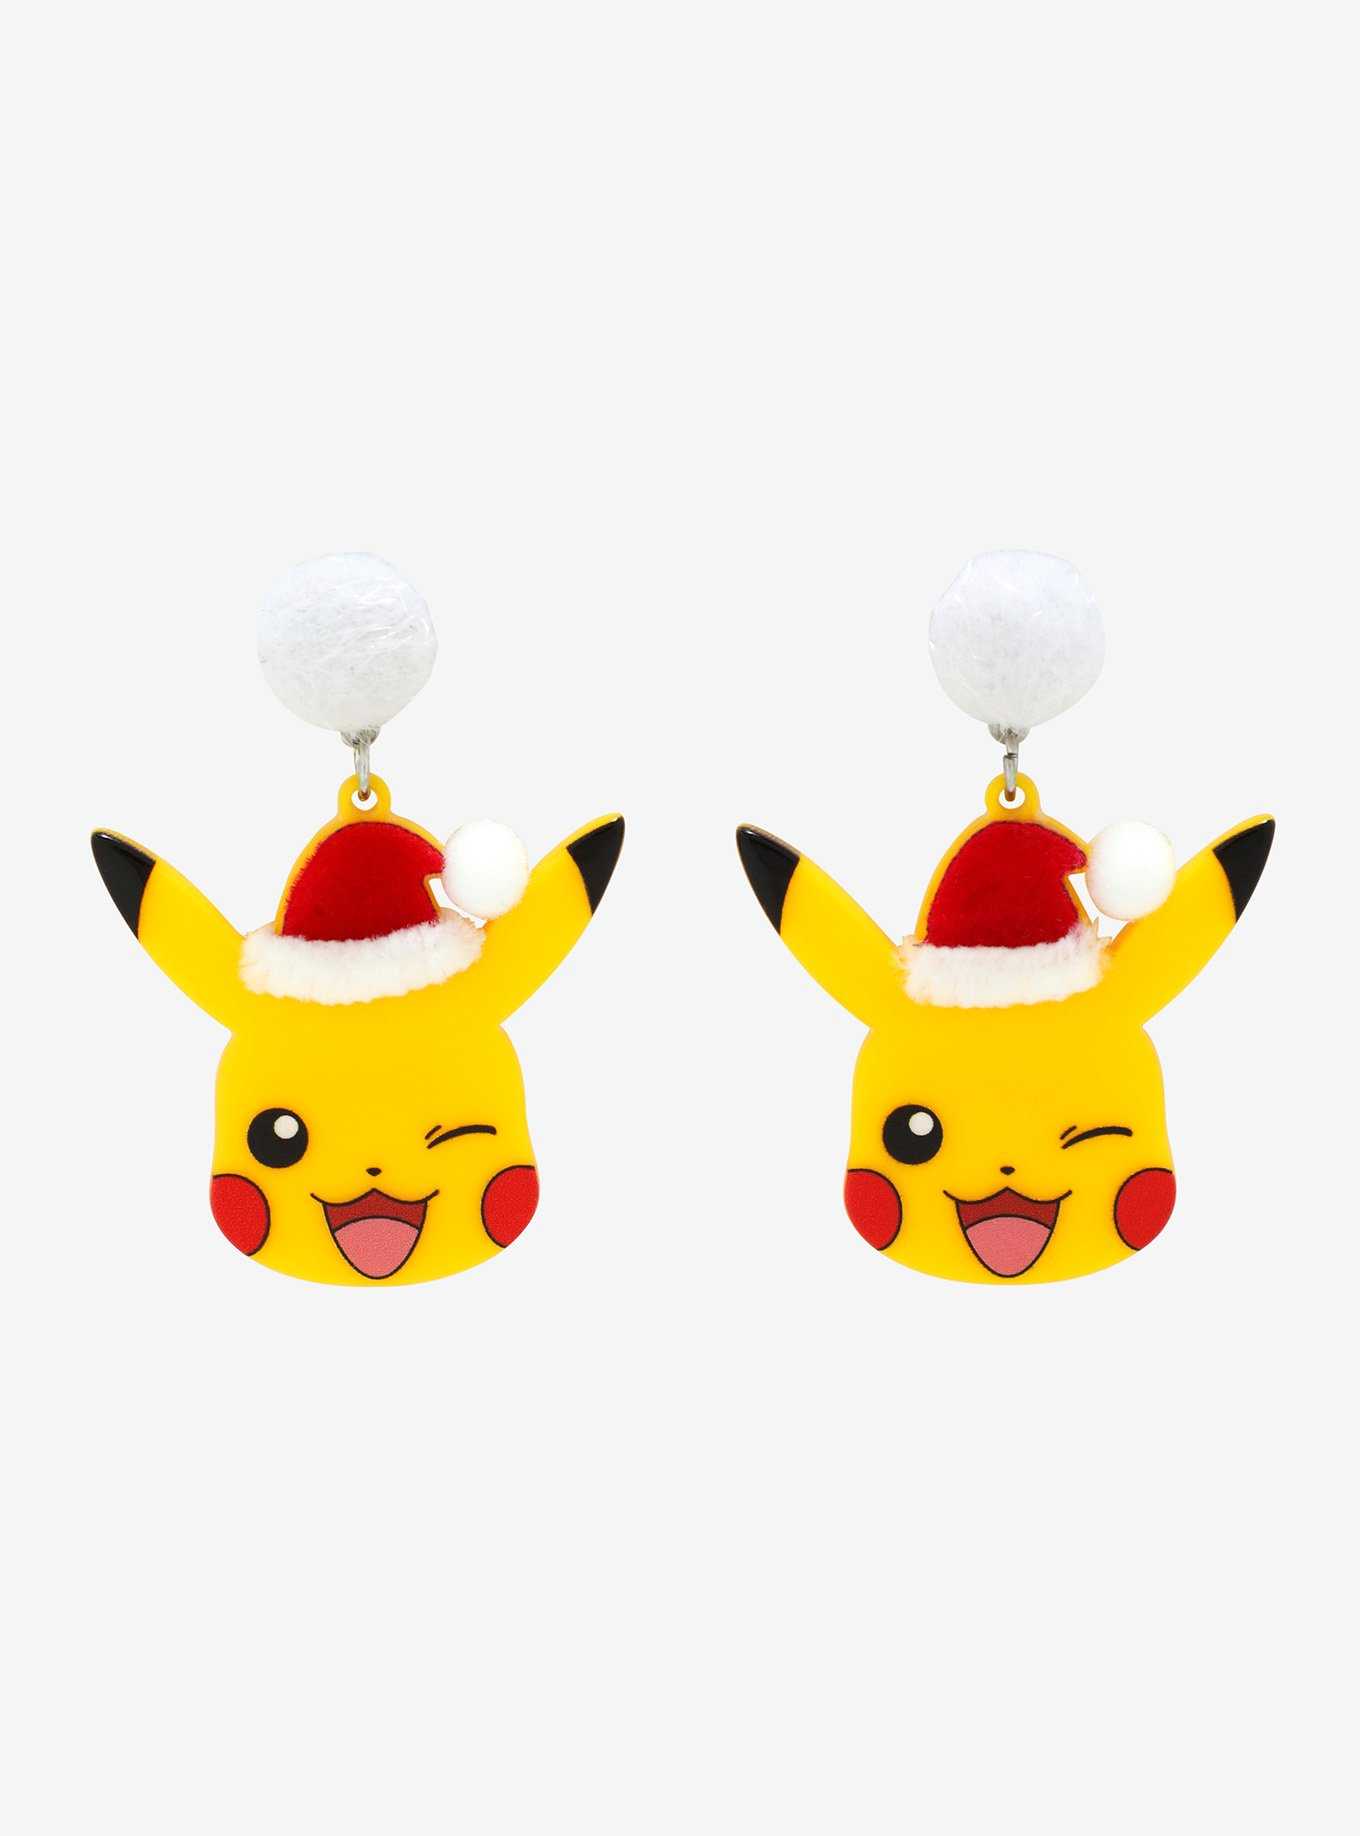 Pokémon Pikachu Santa Hat Earrings - BoxLunch Exclusive, , hi-res